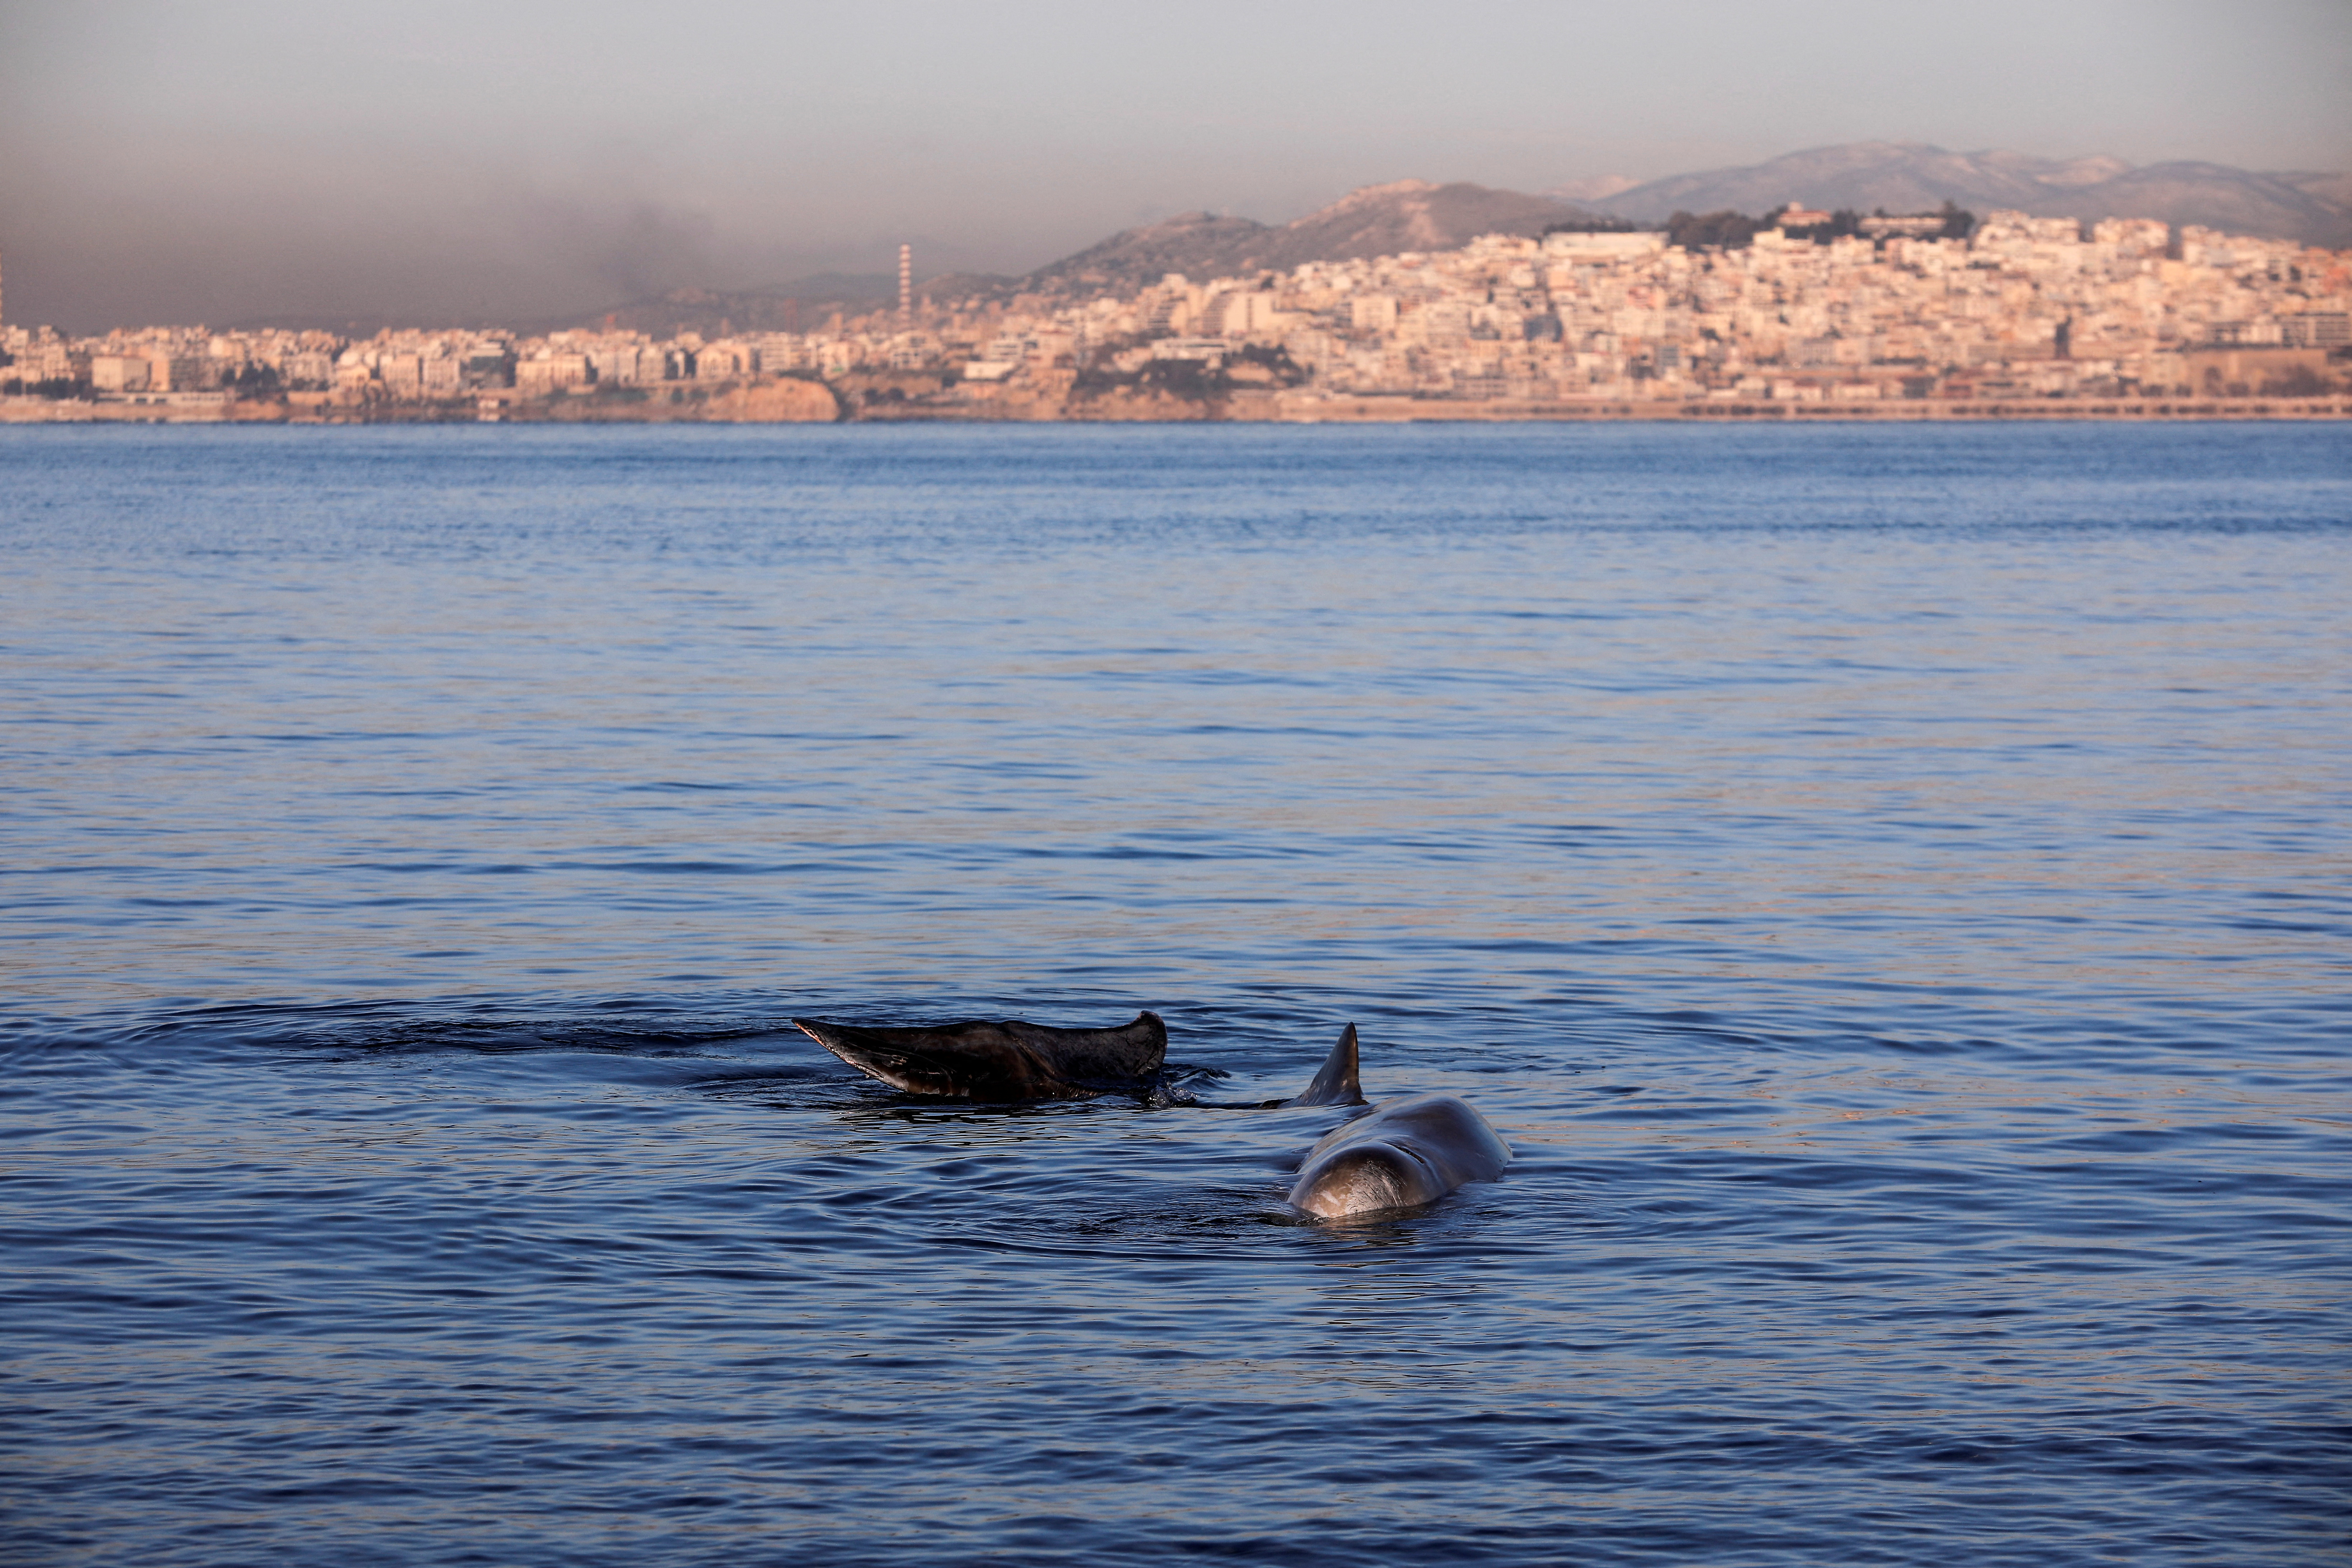 Beaked whale runs aground near beach in coastal in Athens